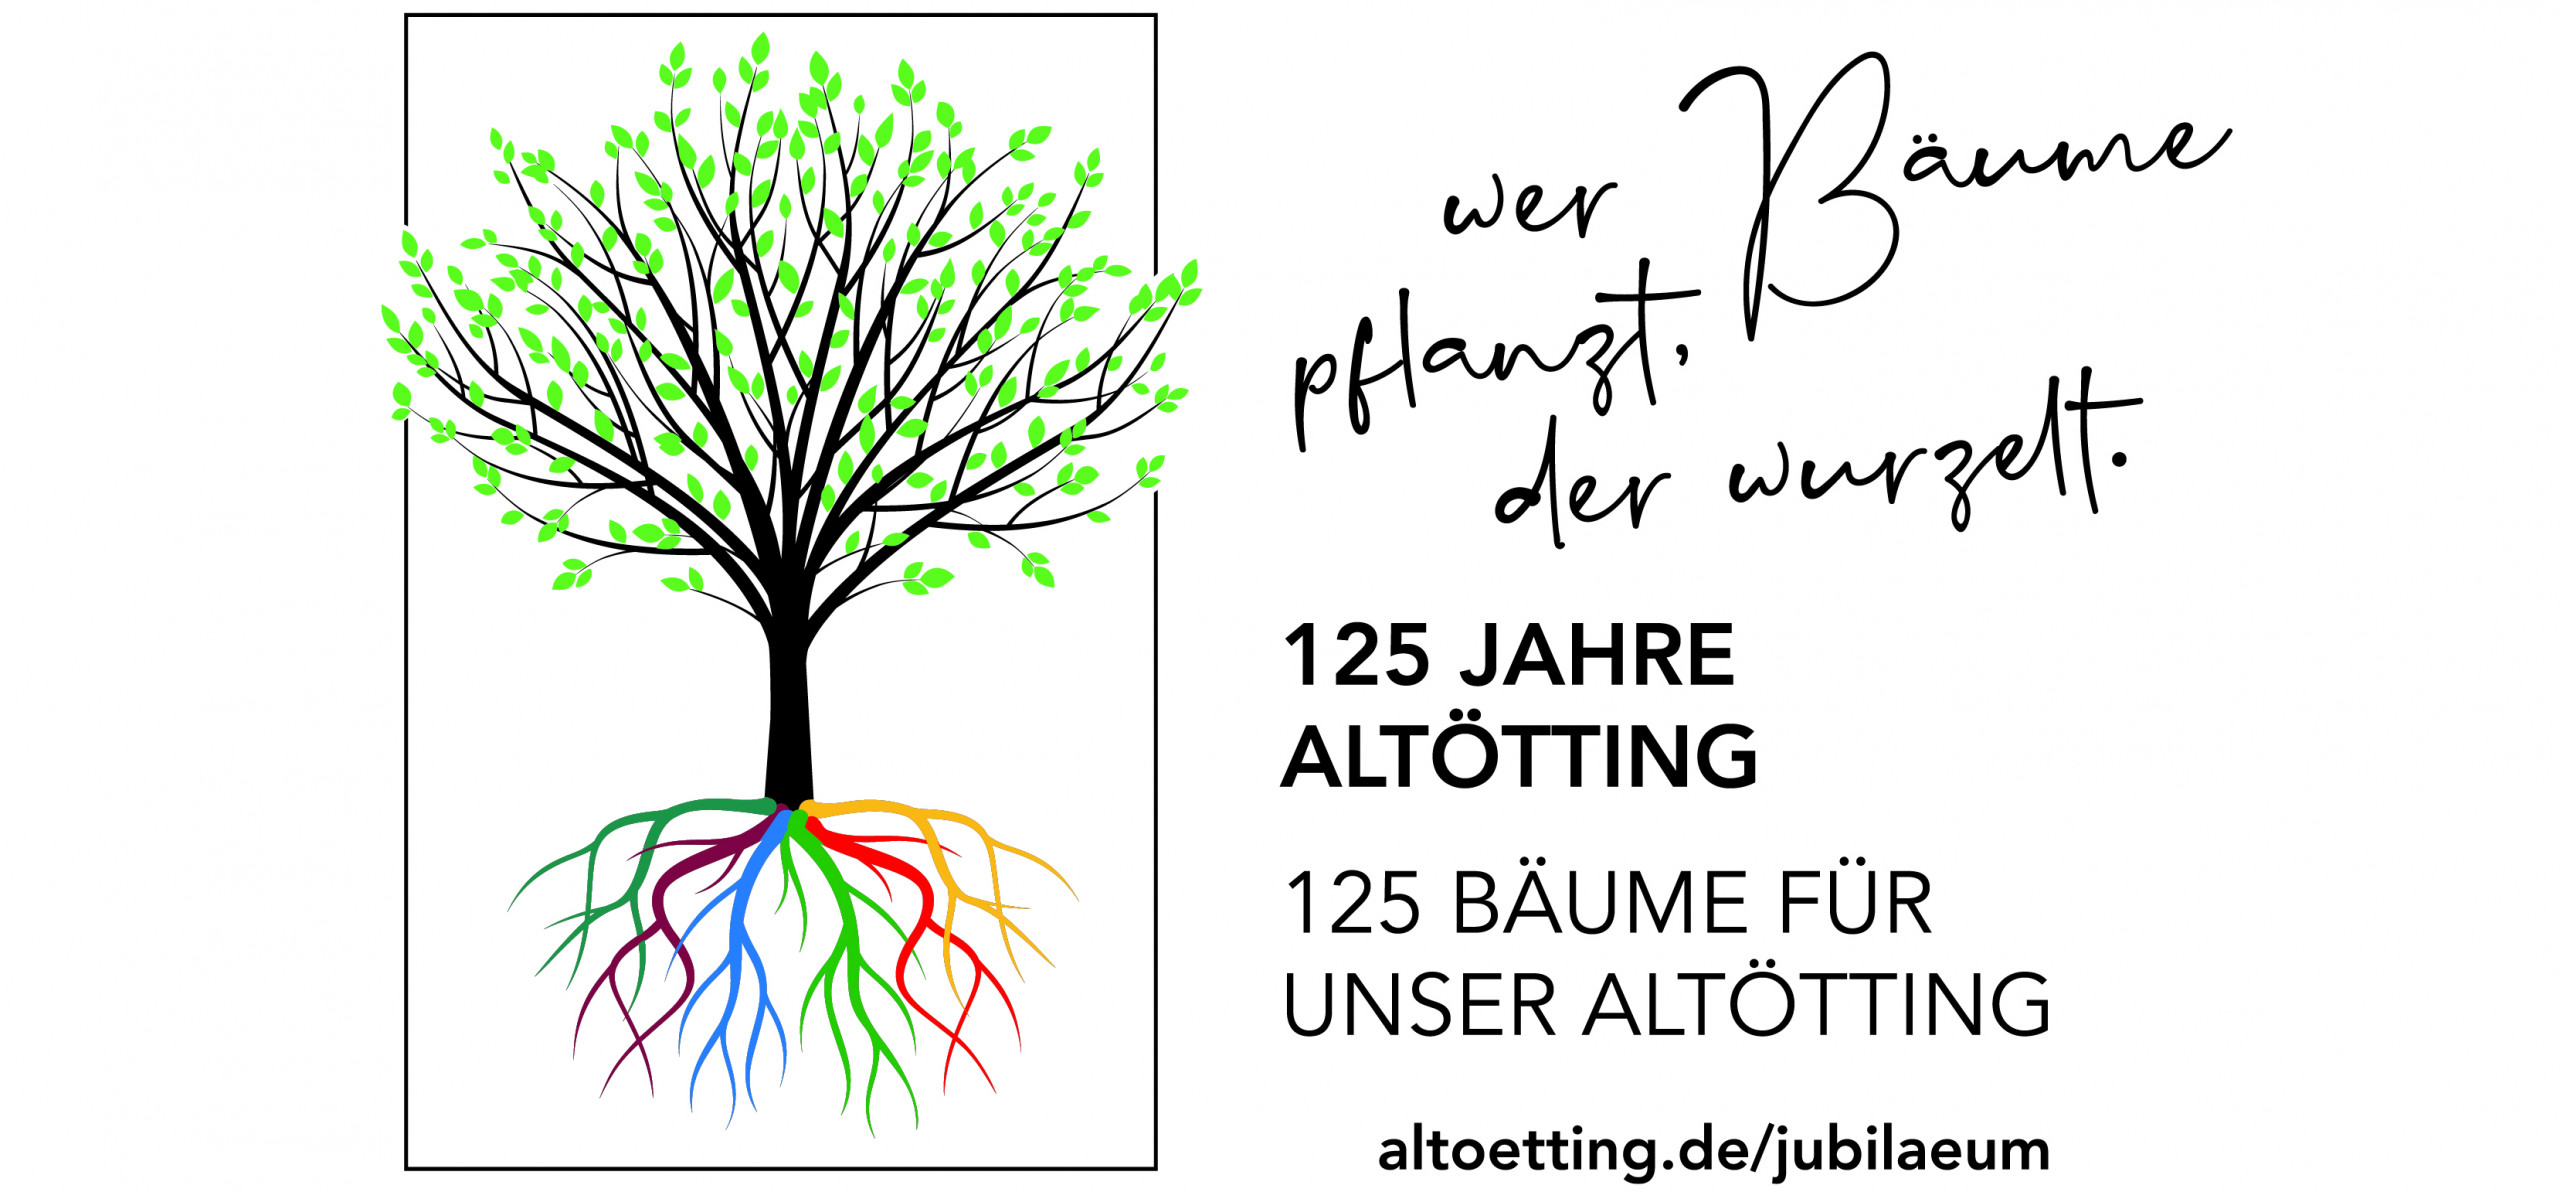 Jubiläums Bäume Altötting Logo